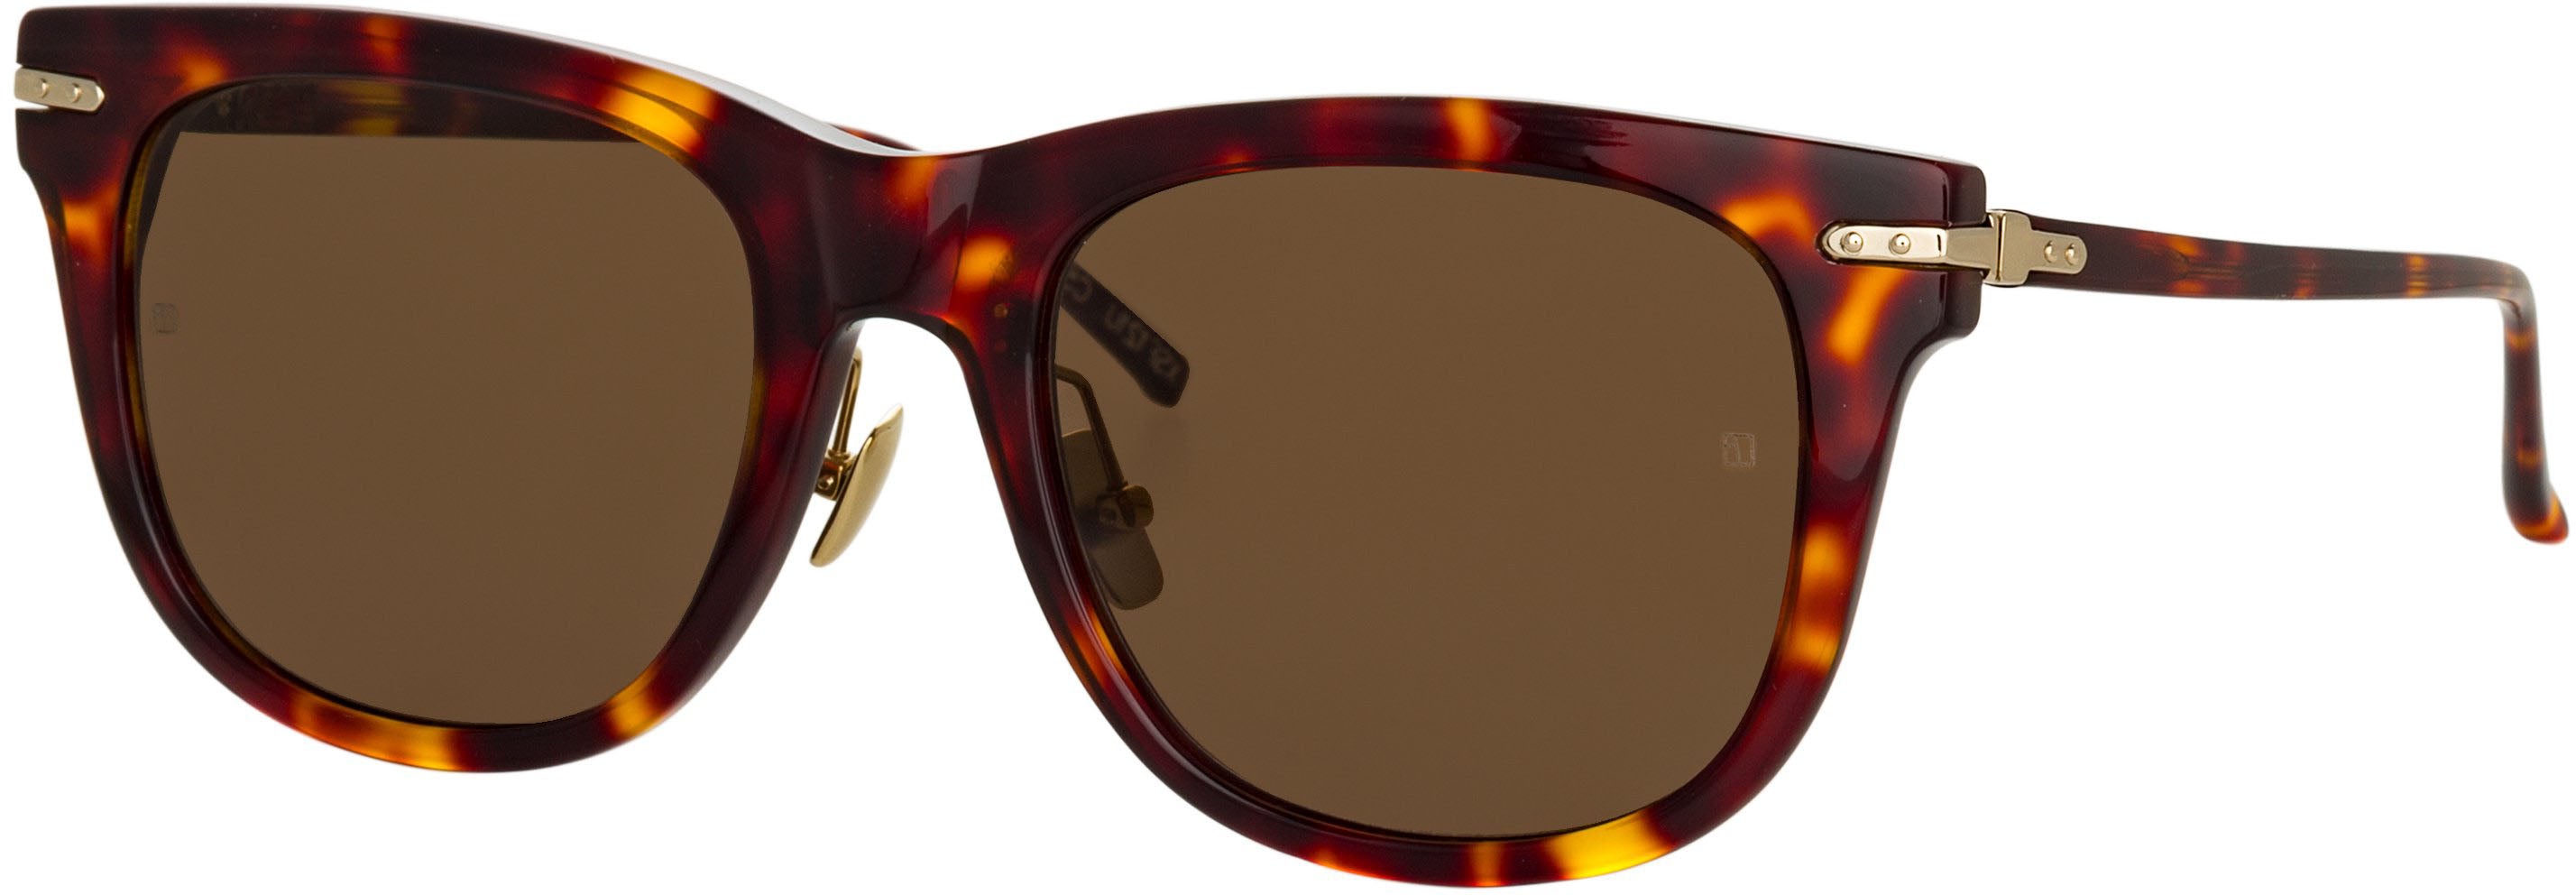 Color_LF43AC5SUN - Chrysler A D-Frame Sunglasses in Tortoiseshell